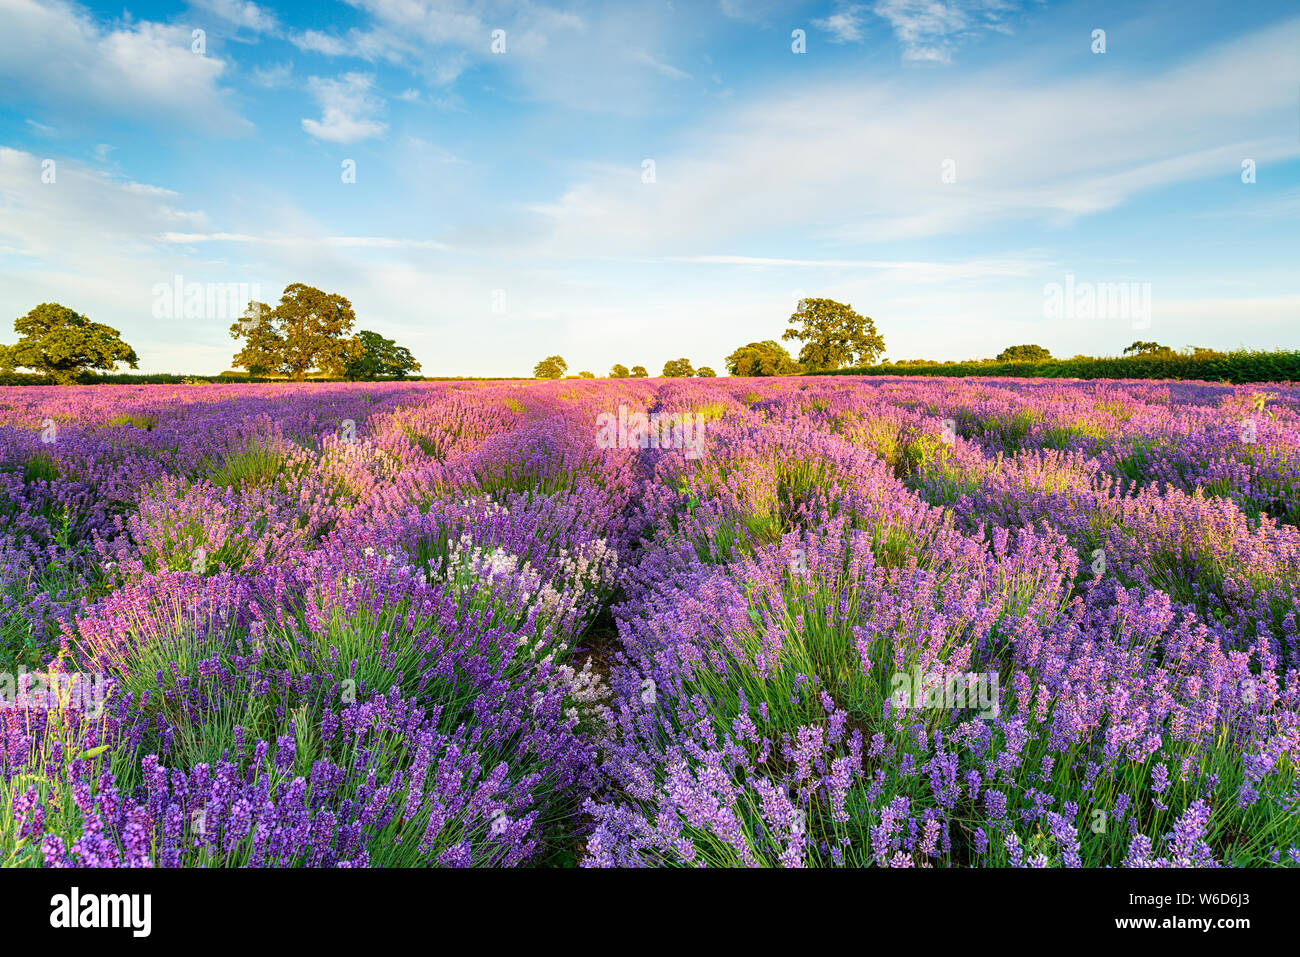 Lavender fields in full bloom near Radstock in the SOmerset countryside ...